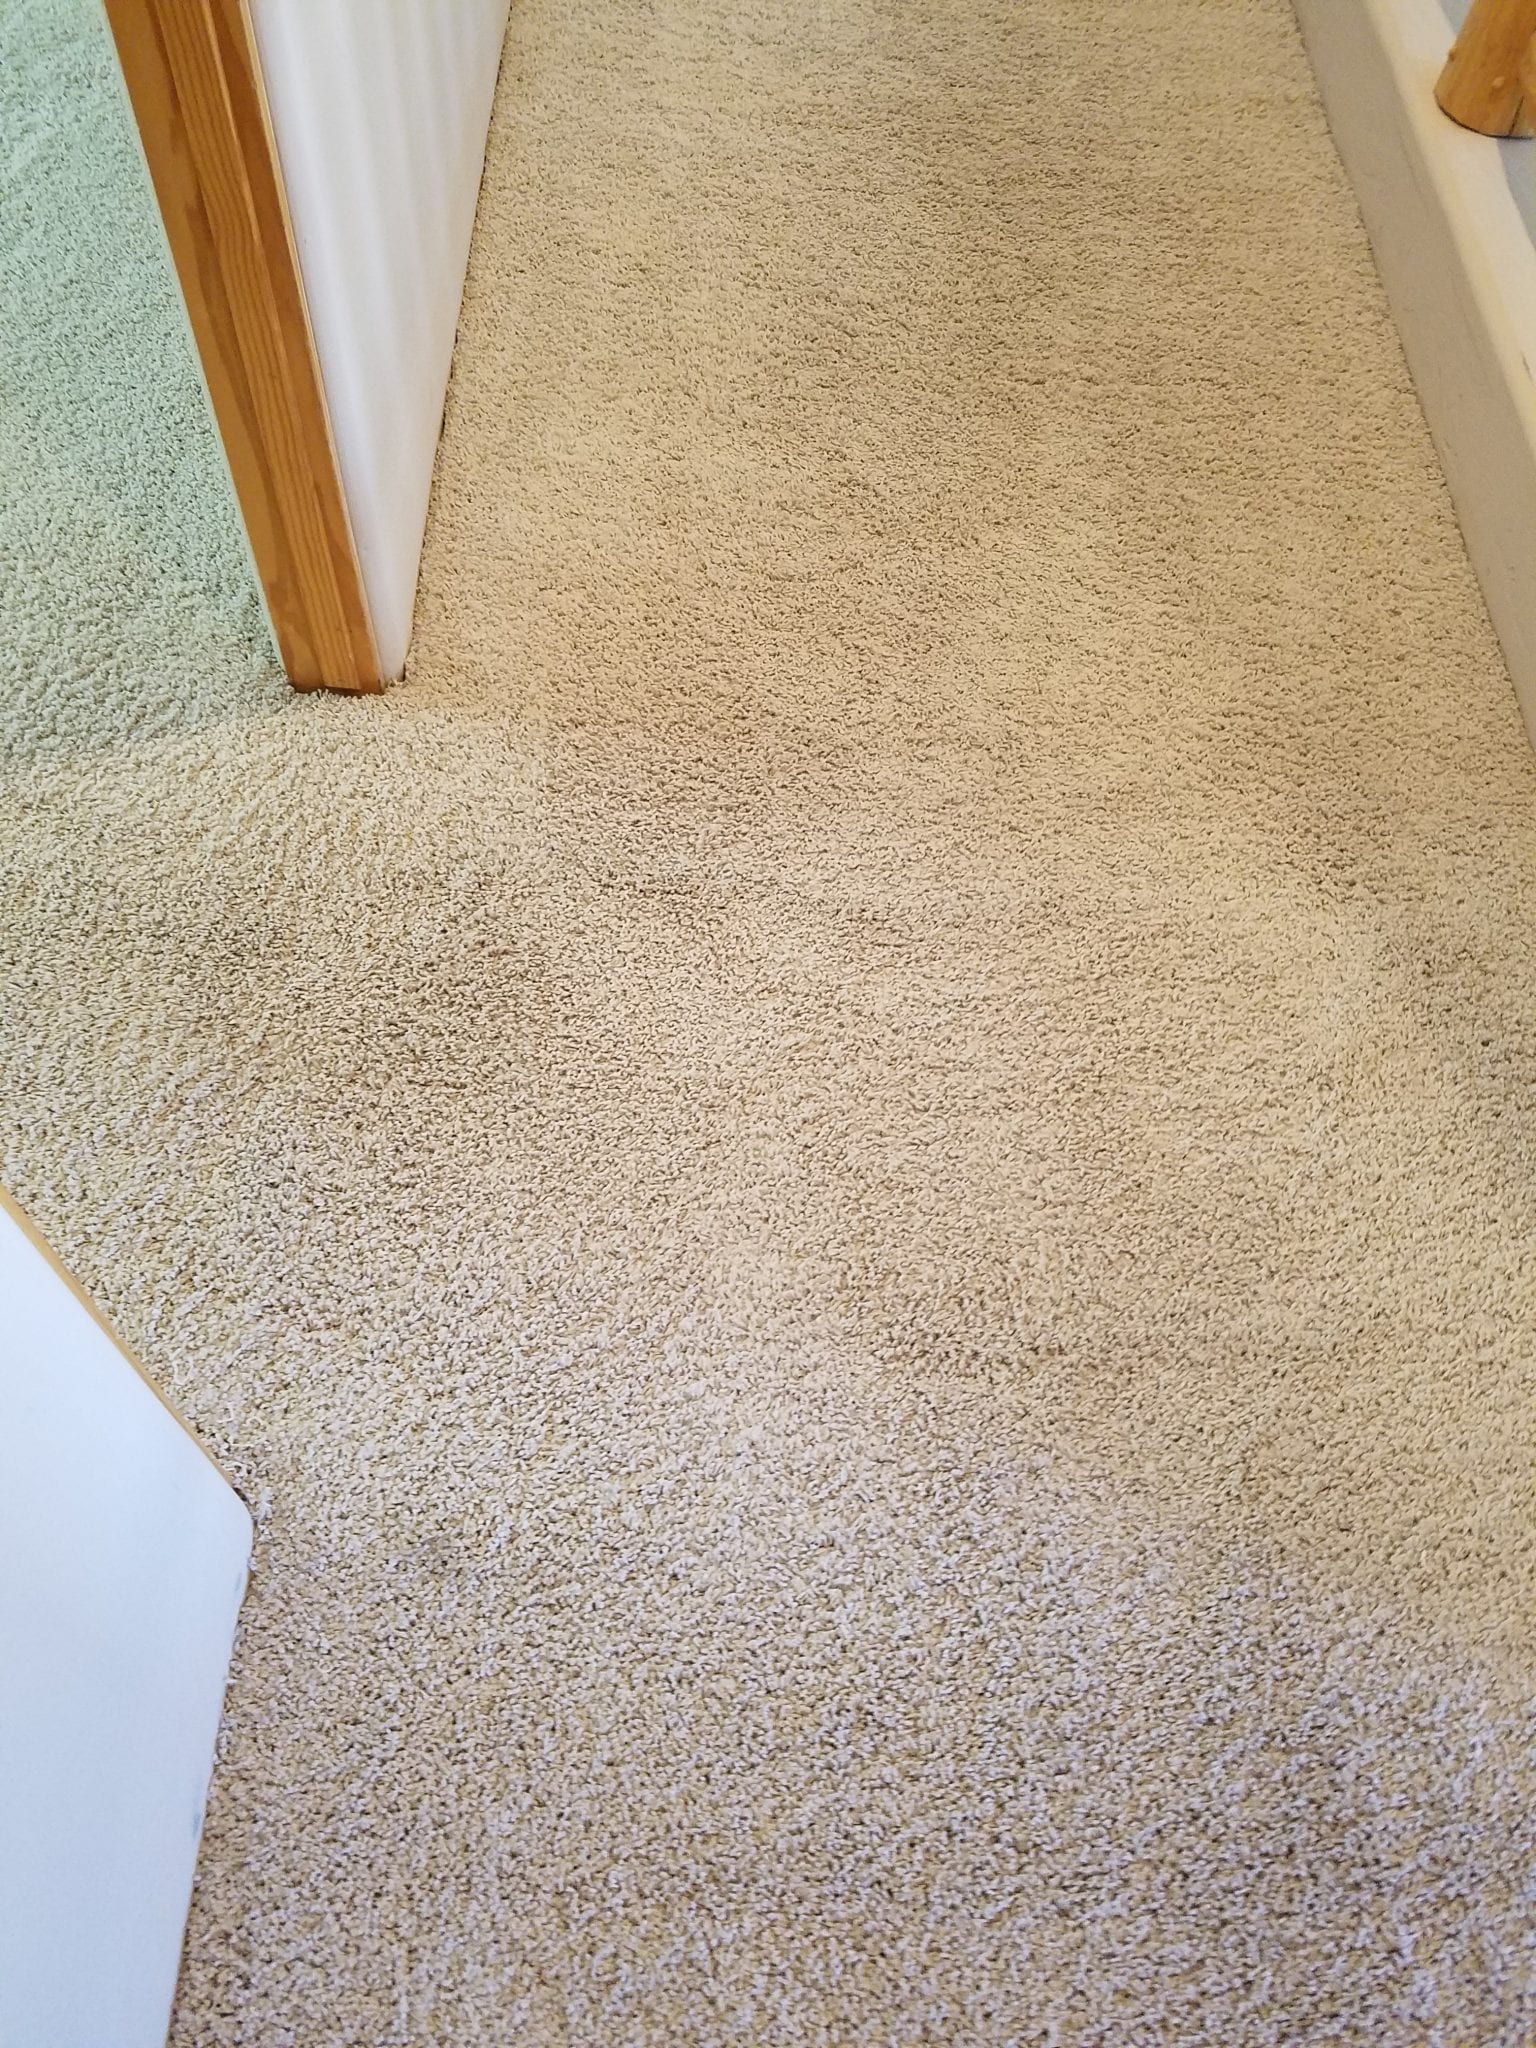 Albuquerque Carpet Restretch and Clean New Mexico Carpet Repair